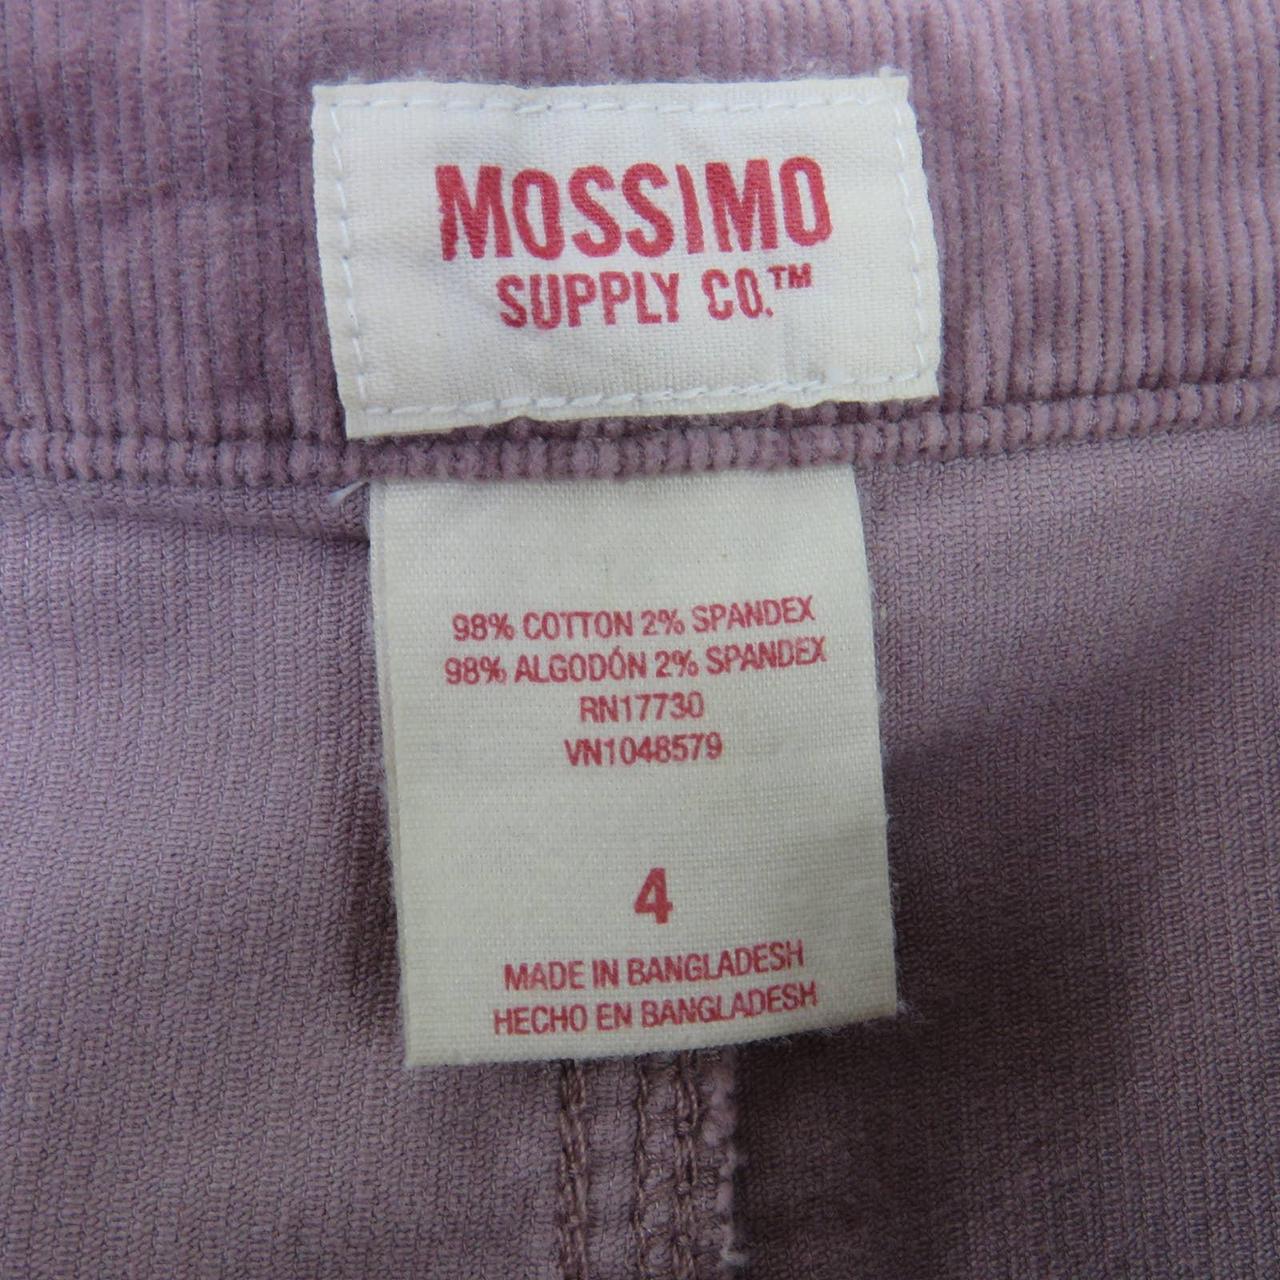 Product Image 4 - Mossimo Purple Corduroy Skirt. Super